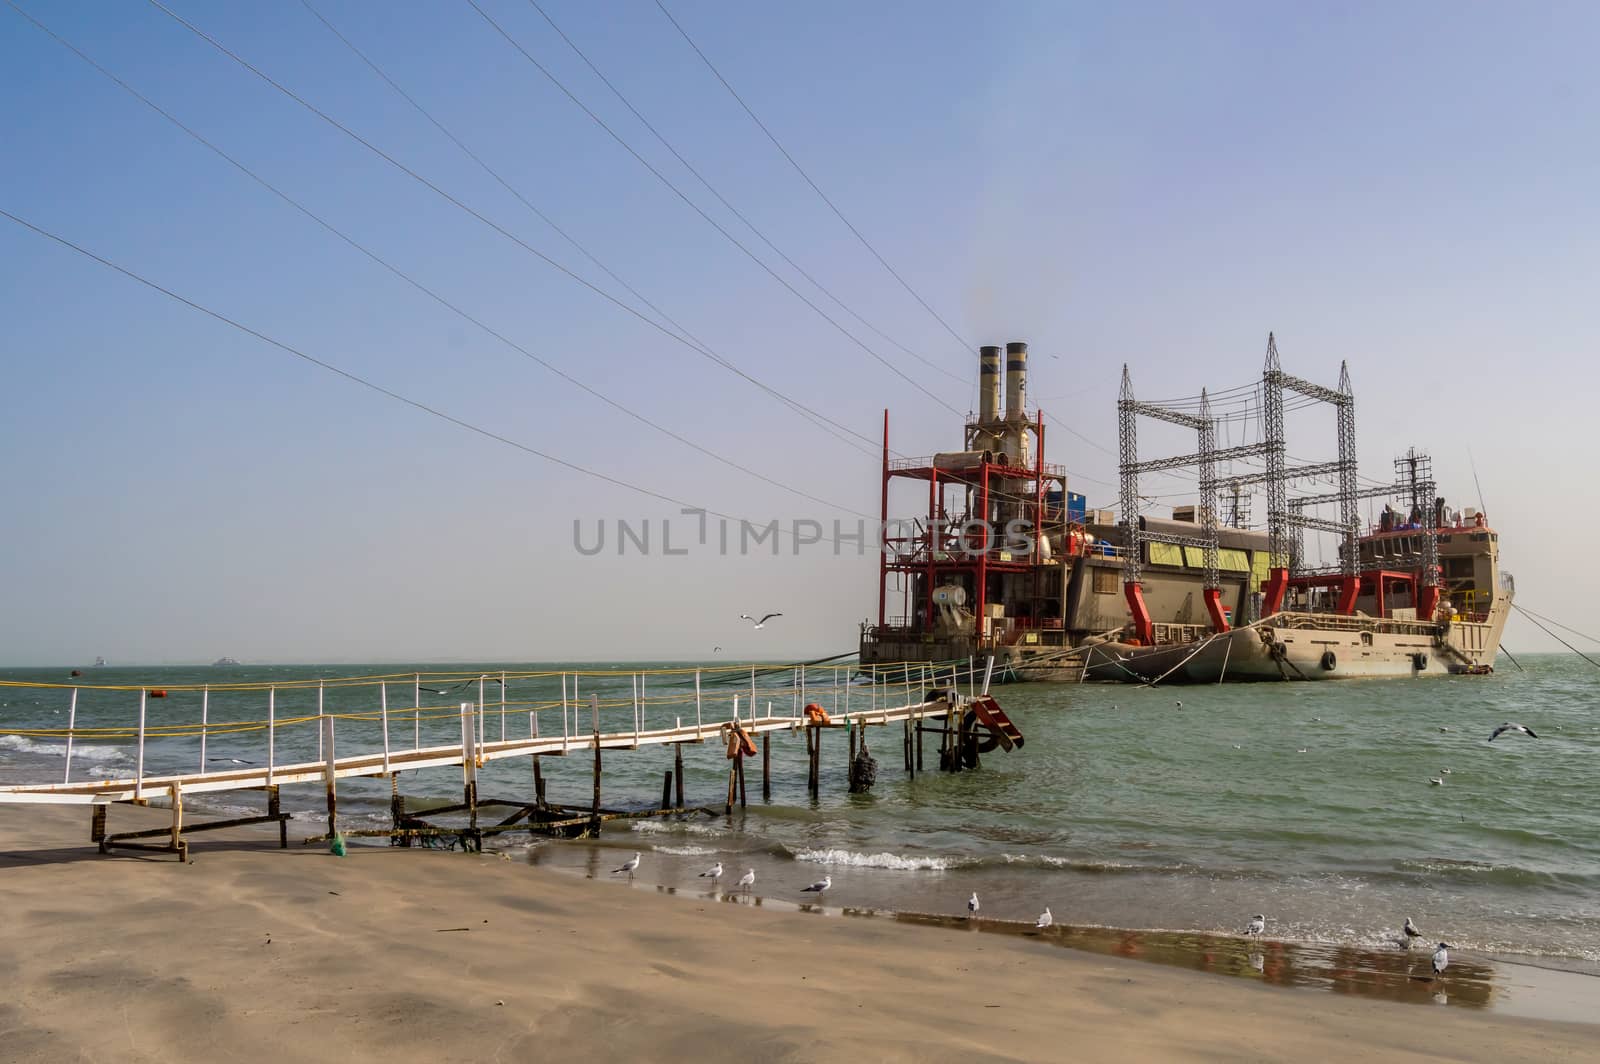 GAMBIA, BIJILO - 07 January 2020: Power plant on moored boats near Banjul beach in The Gambia